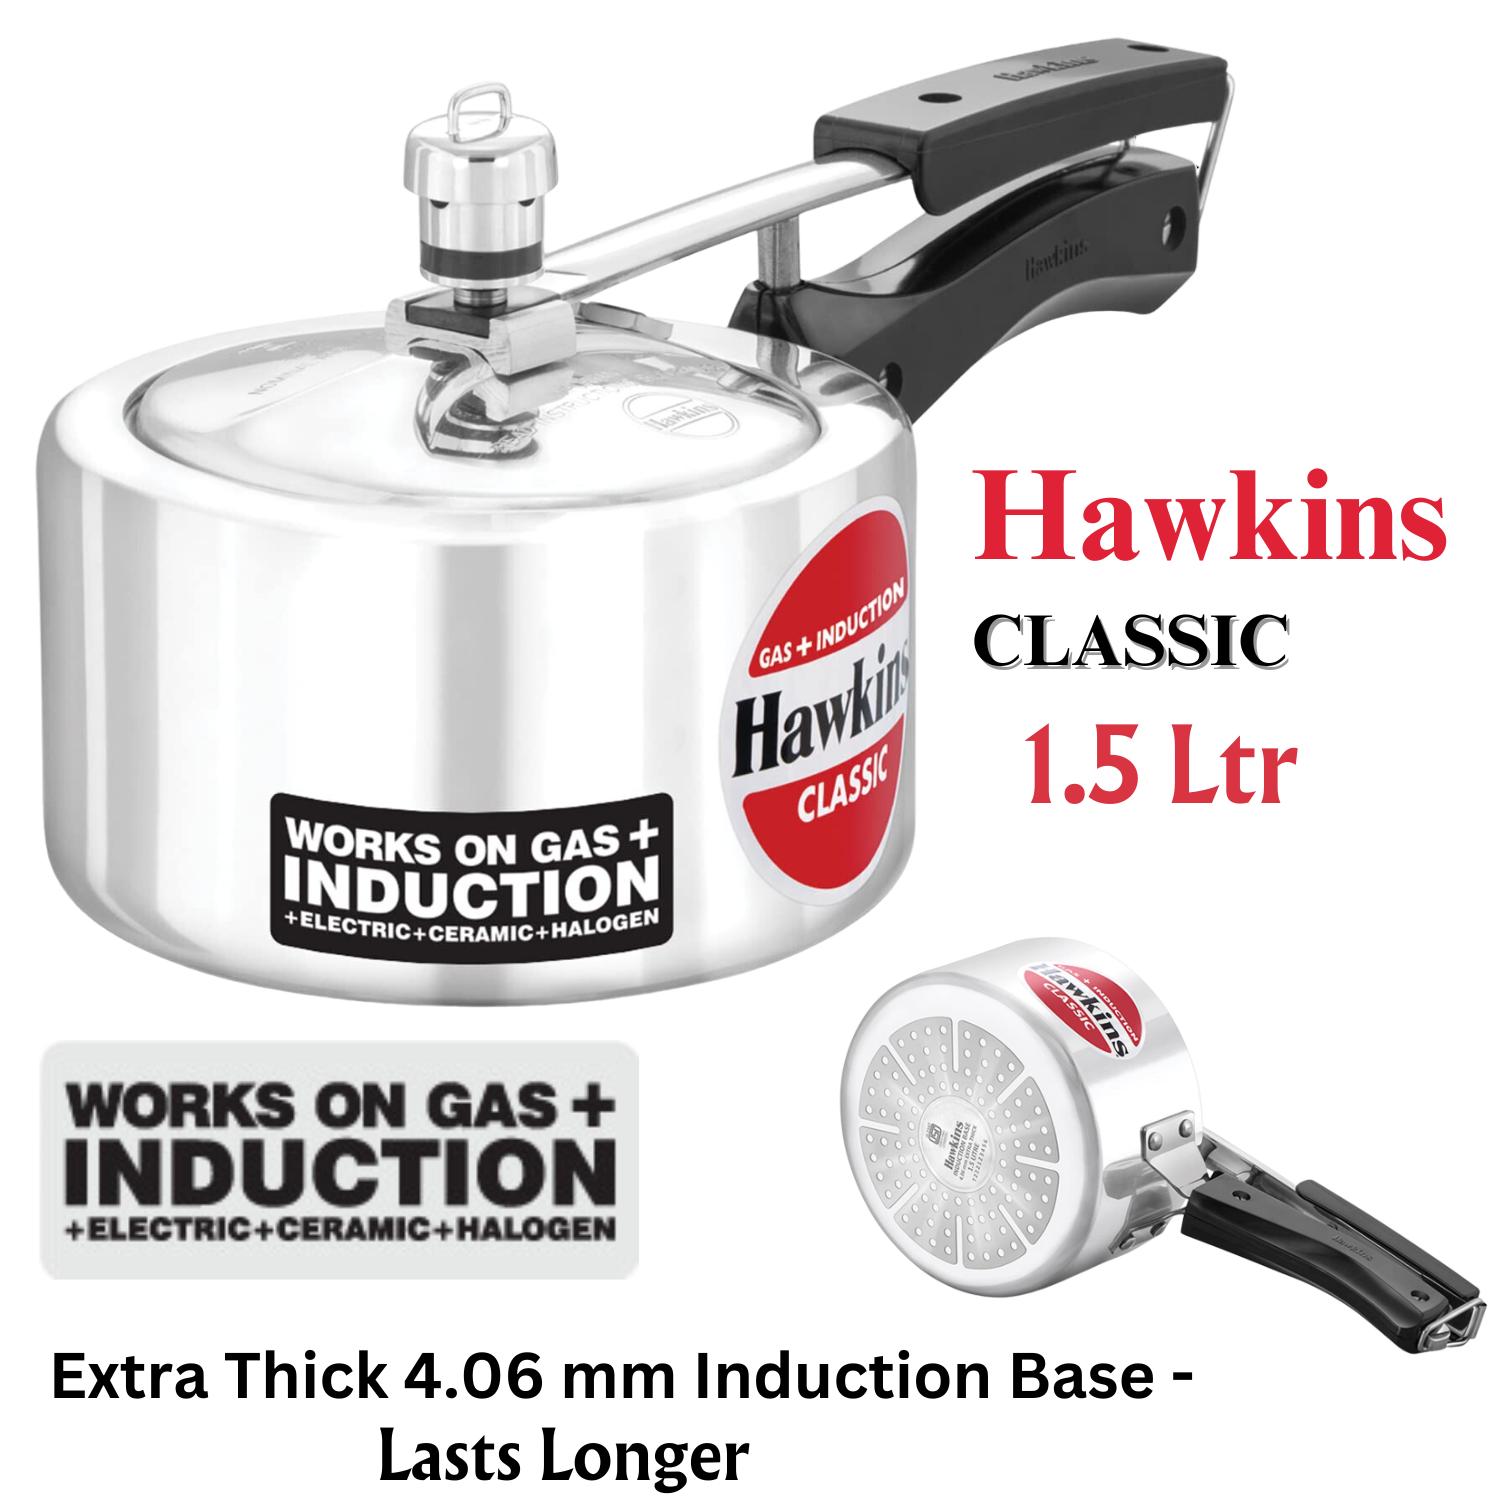 Hawkins Classic Aluminum New Improved Pressure Cooker 4-Liter